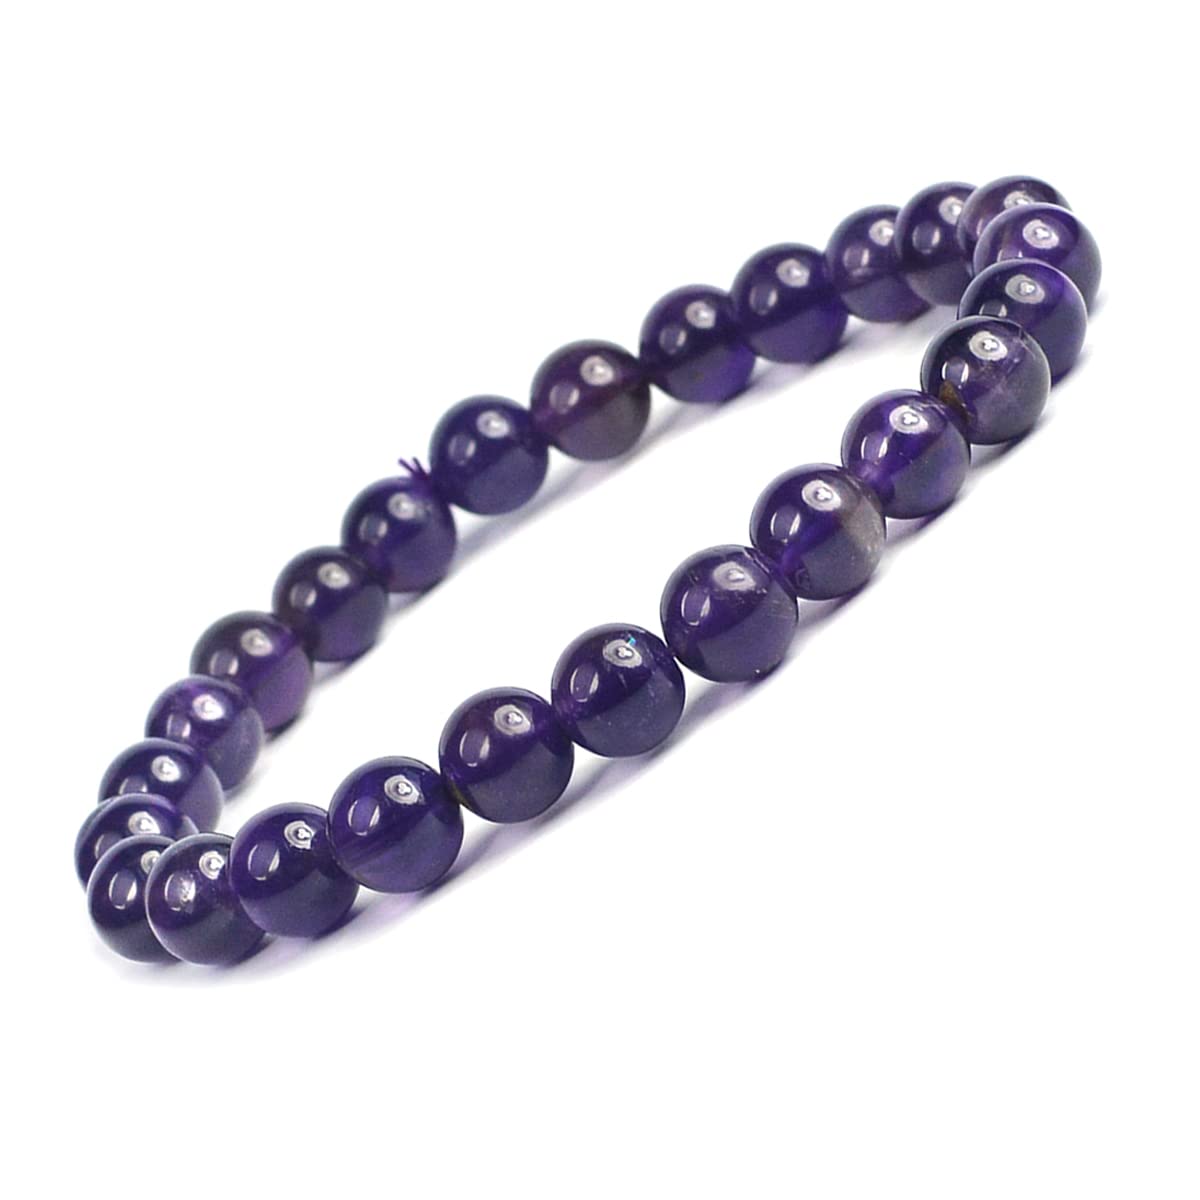 Amethyst Natural Healing Crystal Bracelet - 8mm Round Beads - Beaded Bracelet